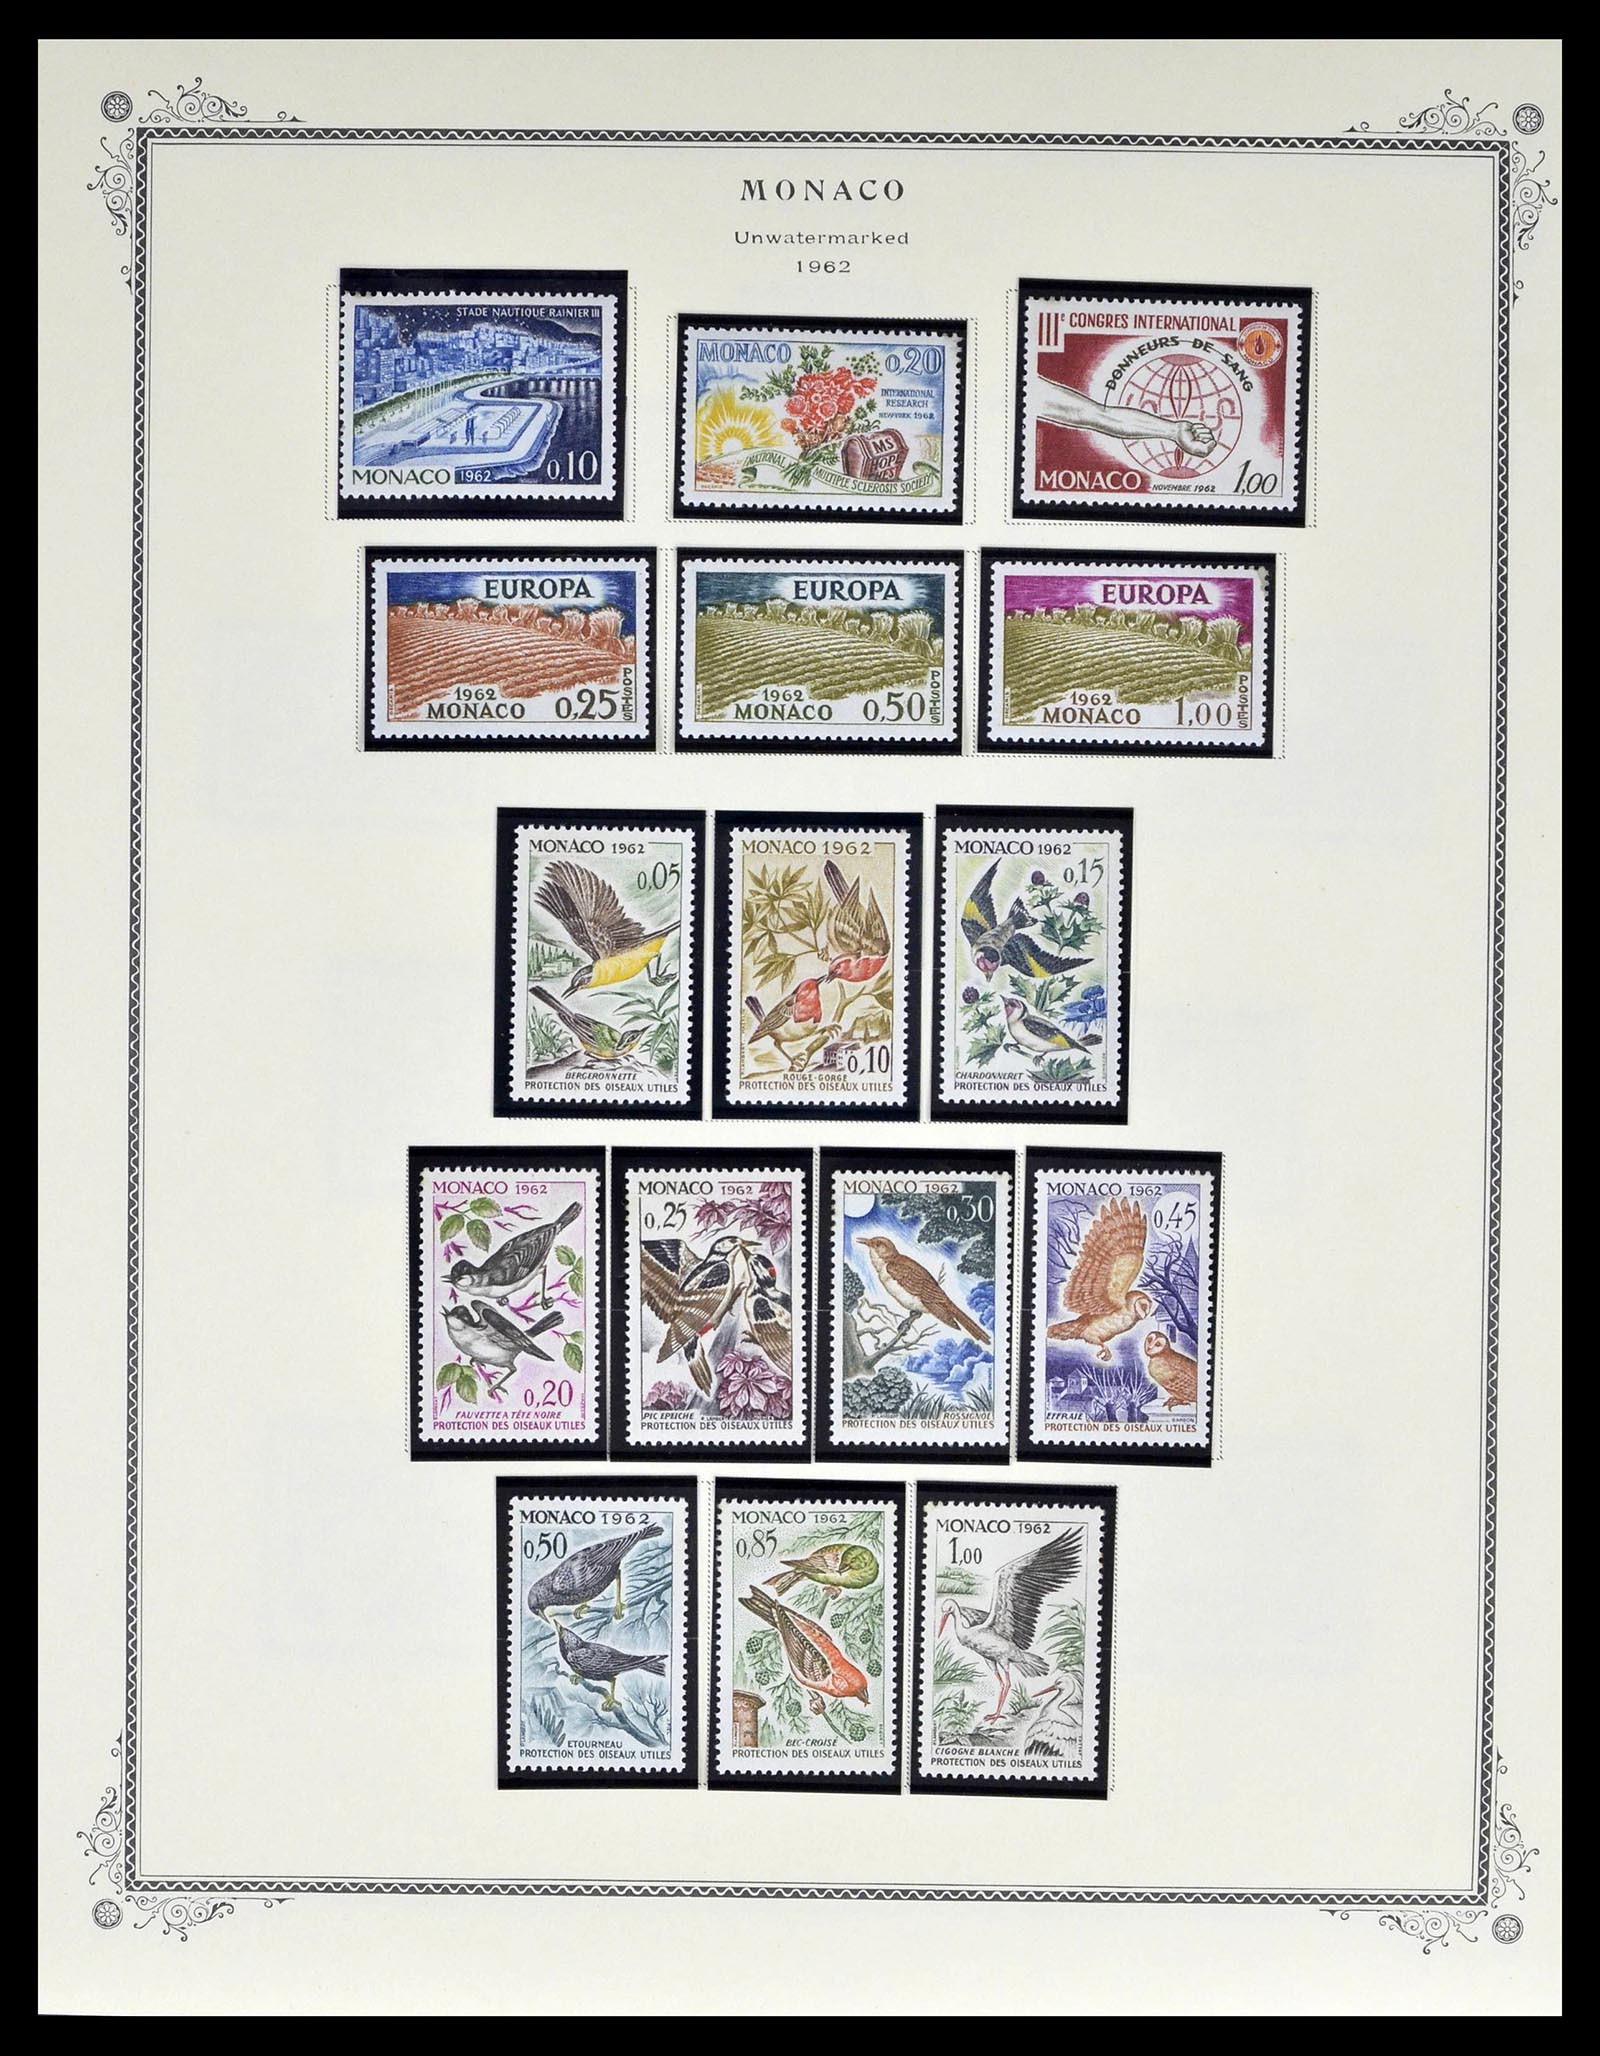 39181 0057 - Stamp collection 39181 Monaco 1885-1980.